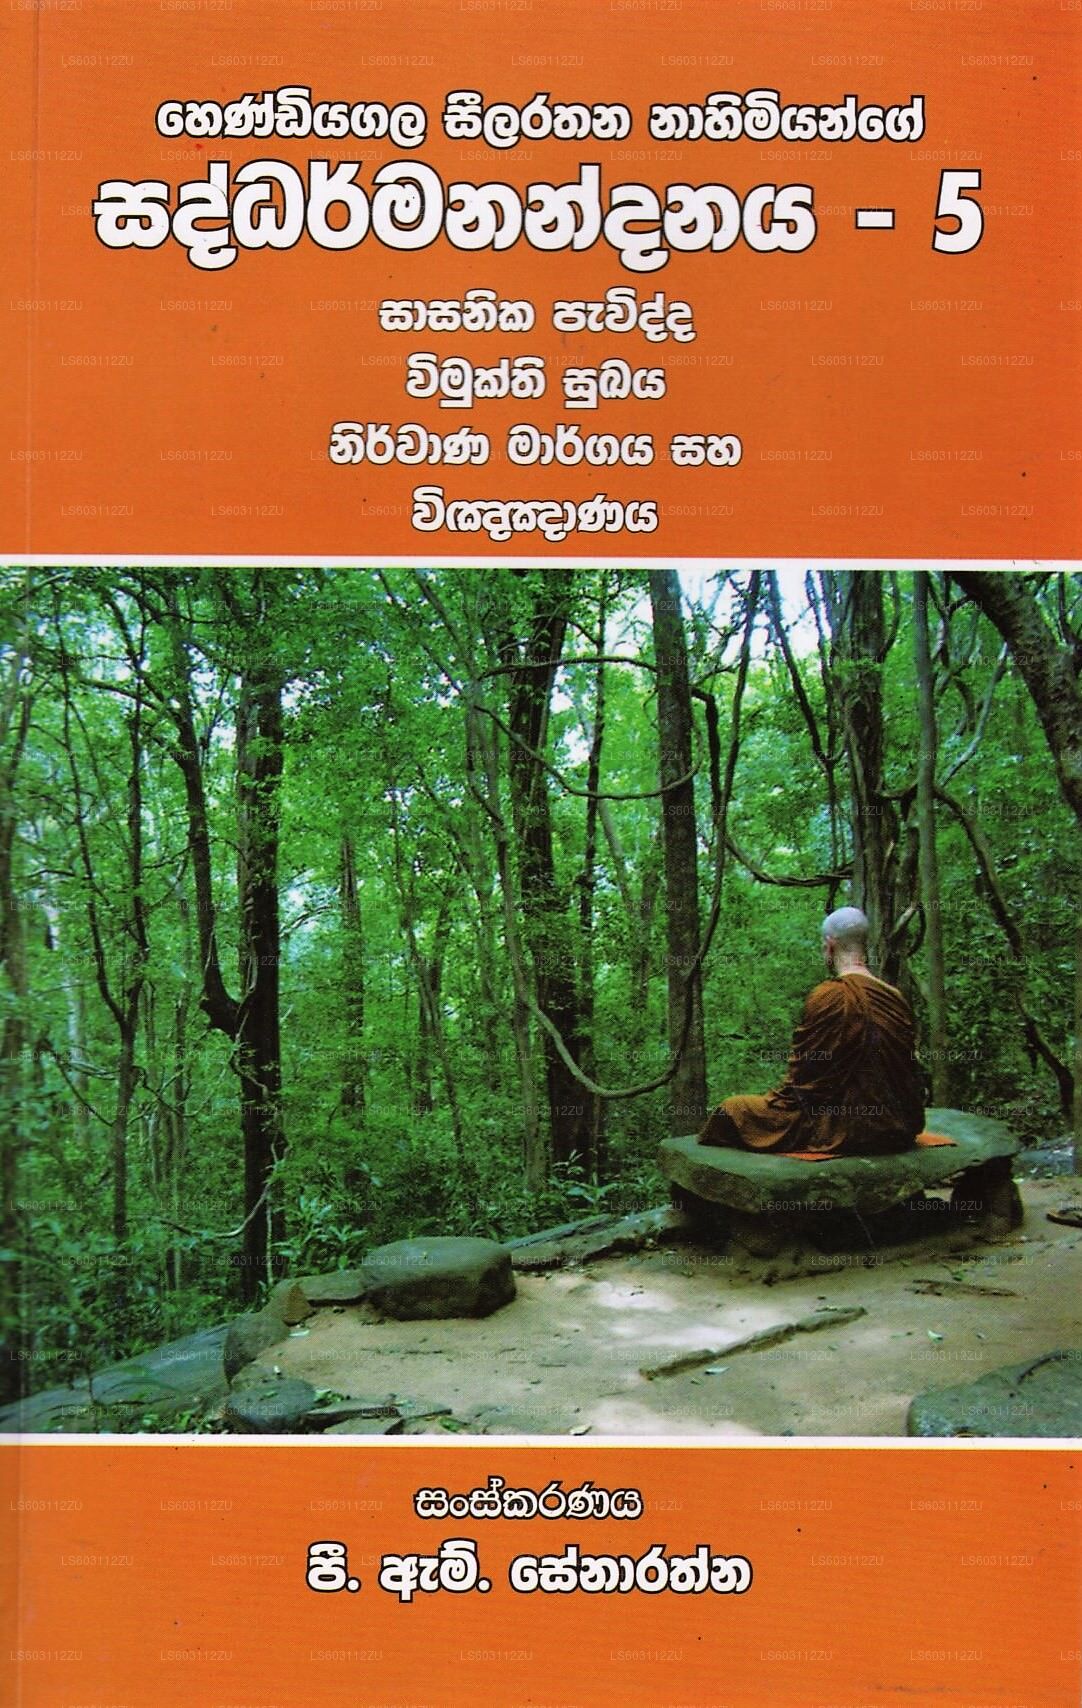 Saddharmanandanaya - 5